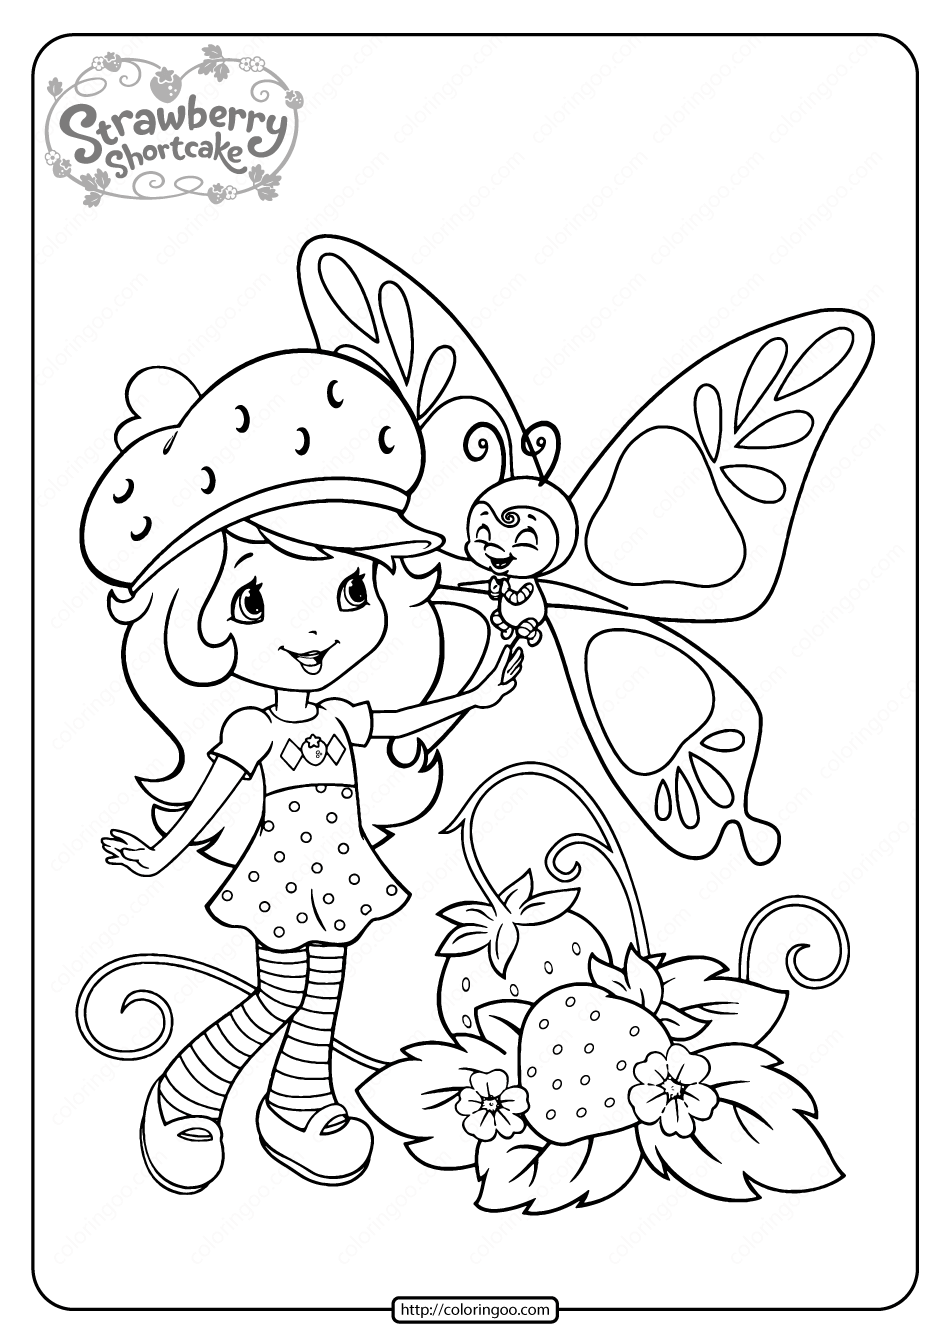 free printable strawberry shortcake coloring page 09